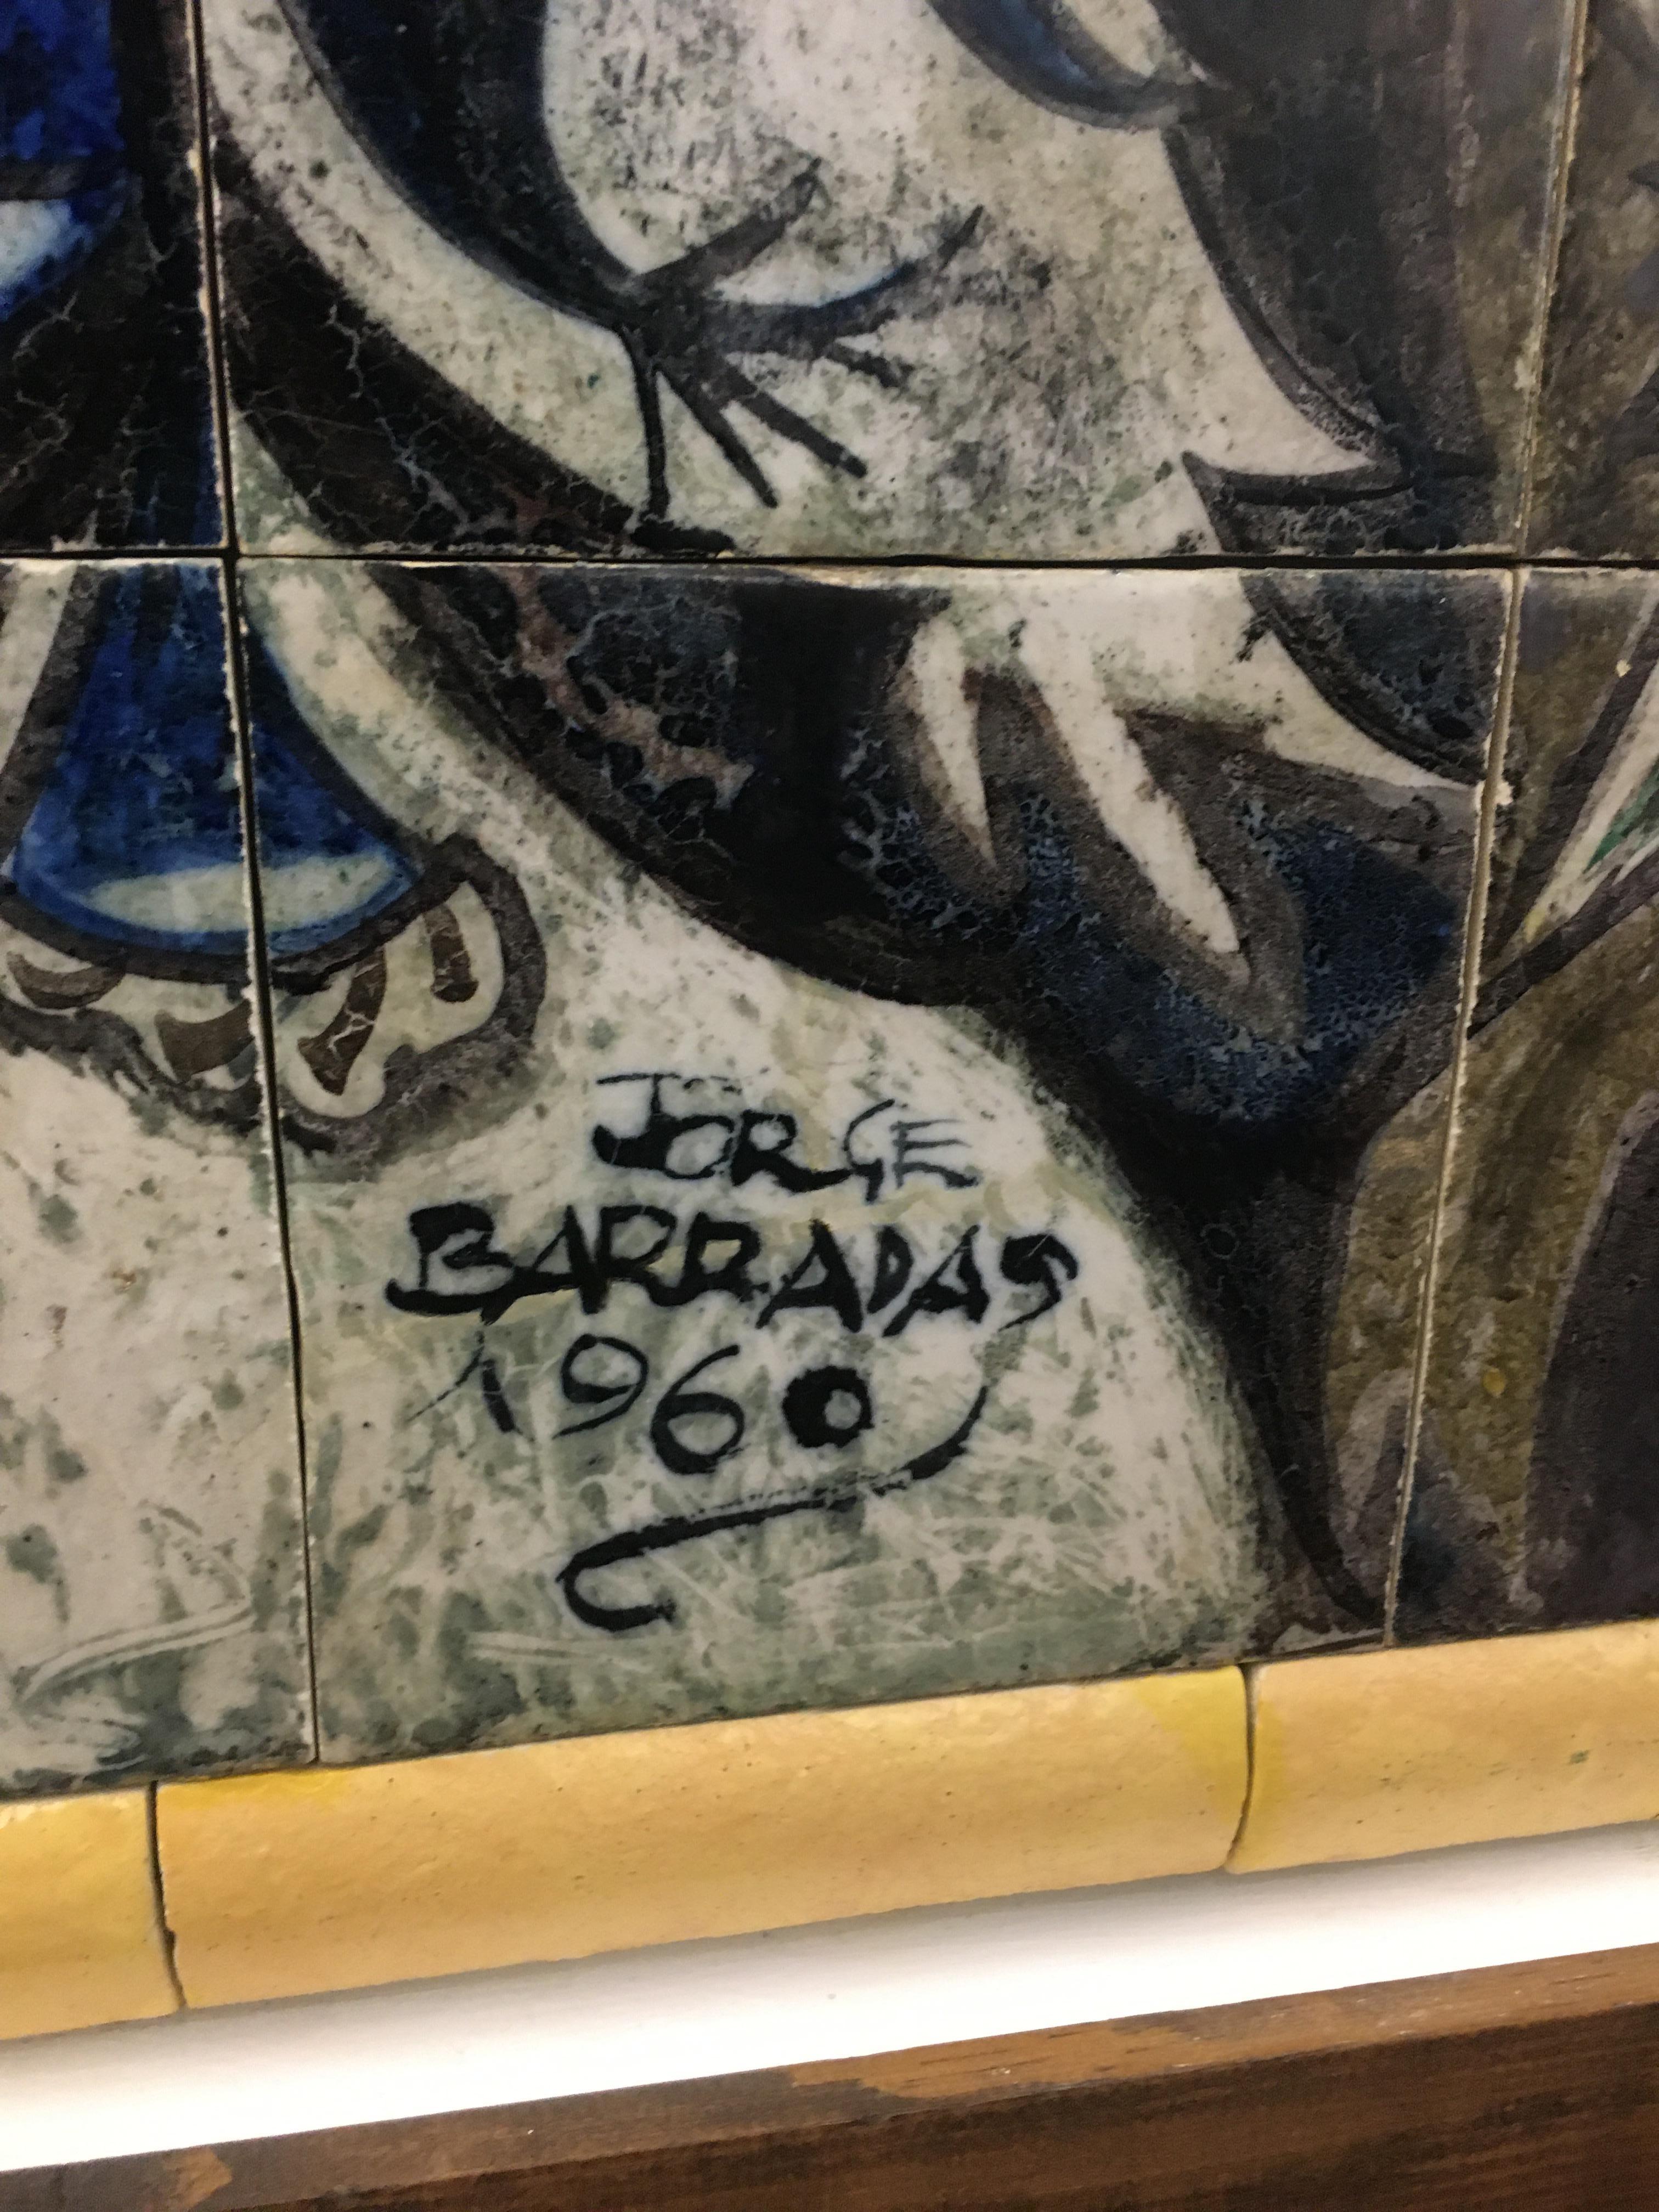 20. Jahrhundert Moderne Jorge Barradas Vögel Keramik Portugiesisch Azulejos Fliese Wandmalerei  
Portugiesische Azulejos mit Vögeln aus glasierter Fayence, 1960,
Signiert Jorge Nicholson Moore Barradas (Lisboa, 1894 - Lisboa, 1971).
Jorge Barradas